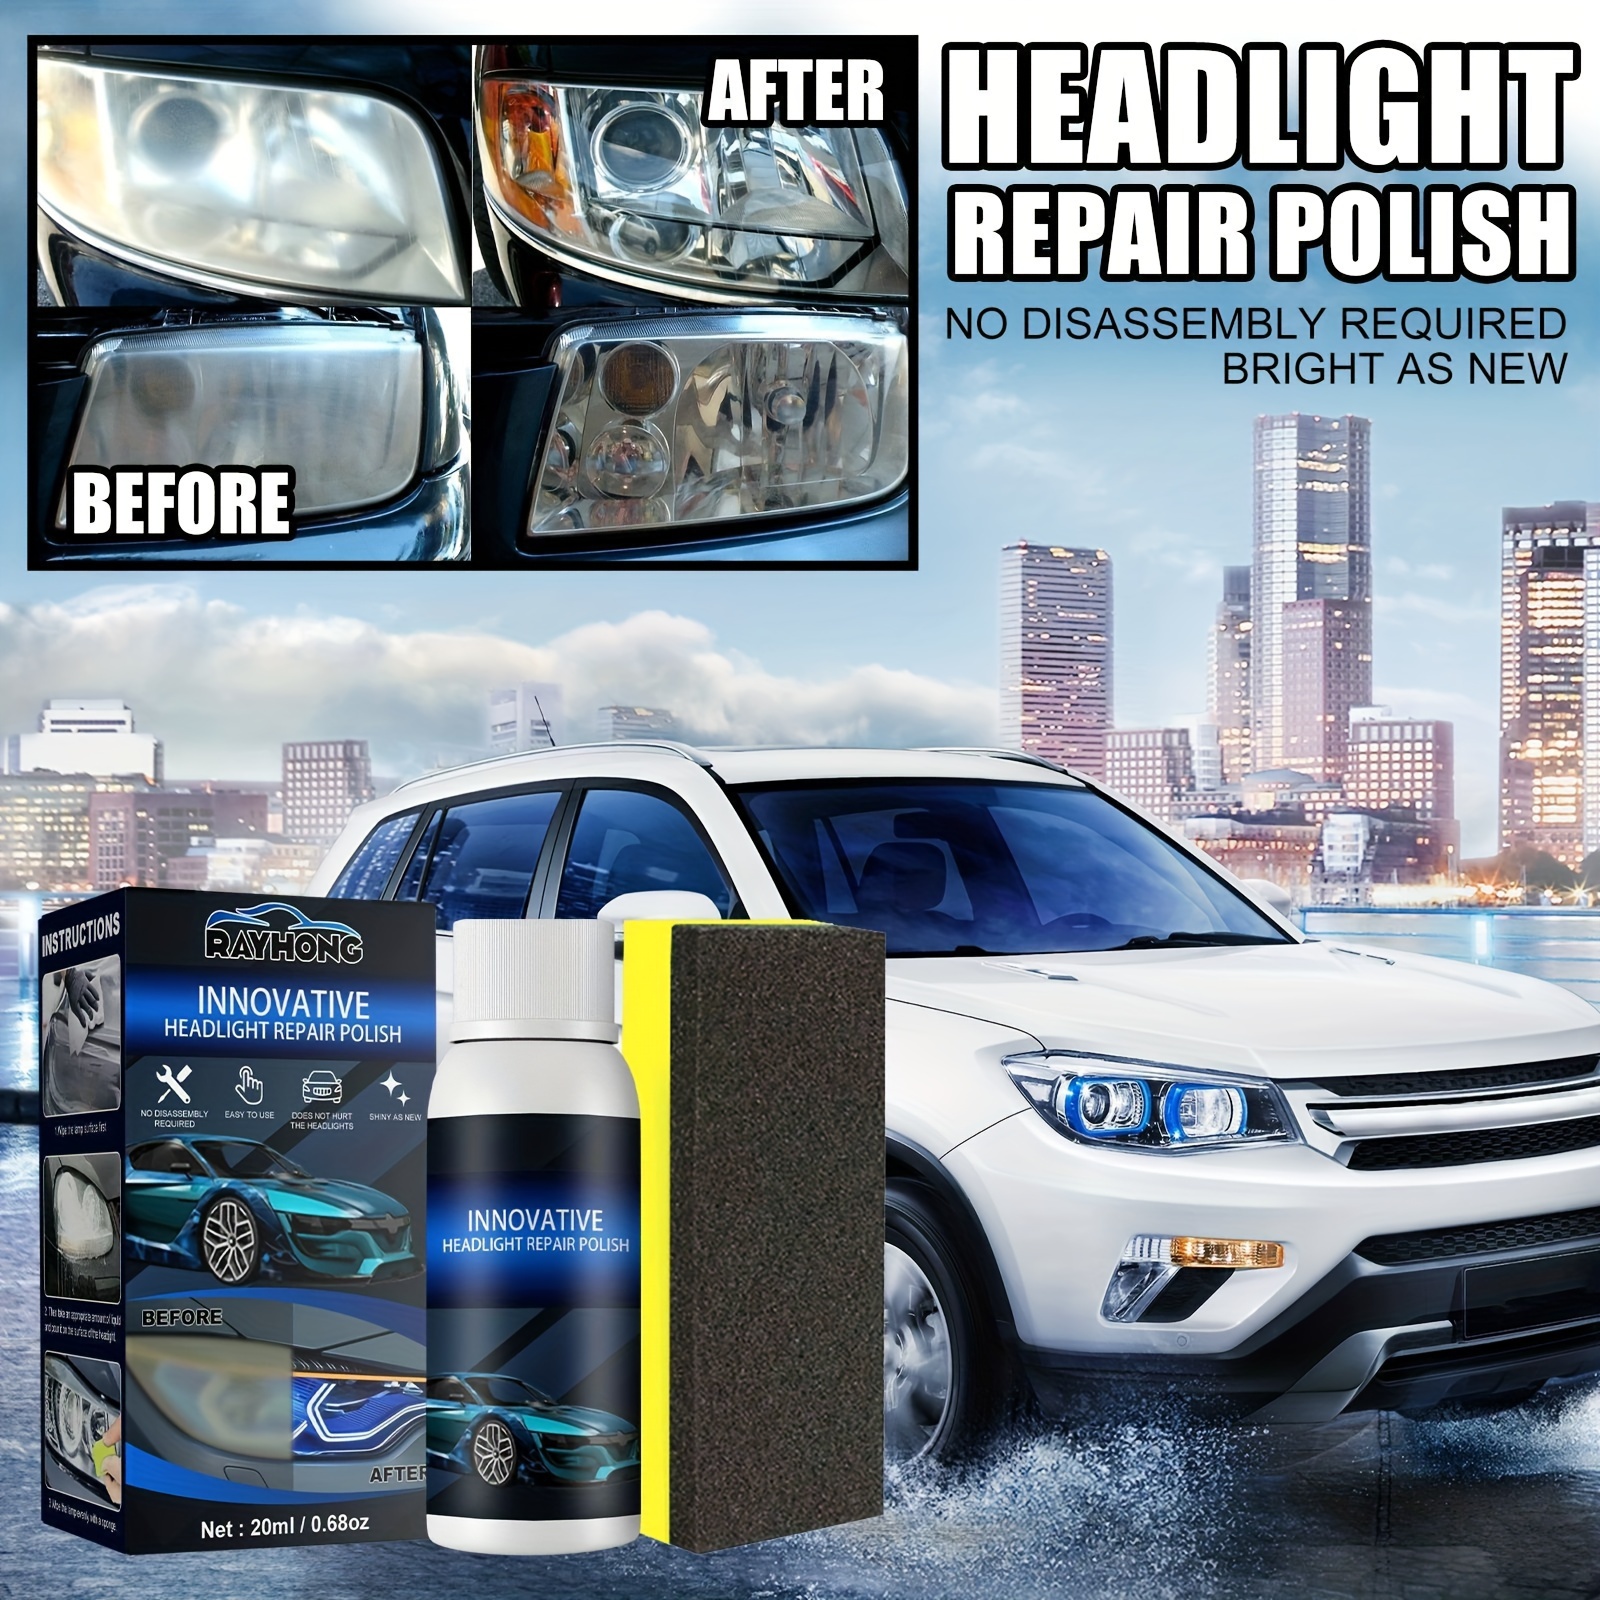 Vernis innovant pour réparation de phares, liquide de réparation de phares  de voiture, spray de réparation de lentille de phare, spray de réparation